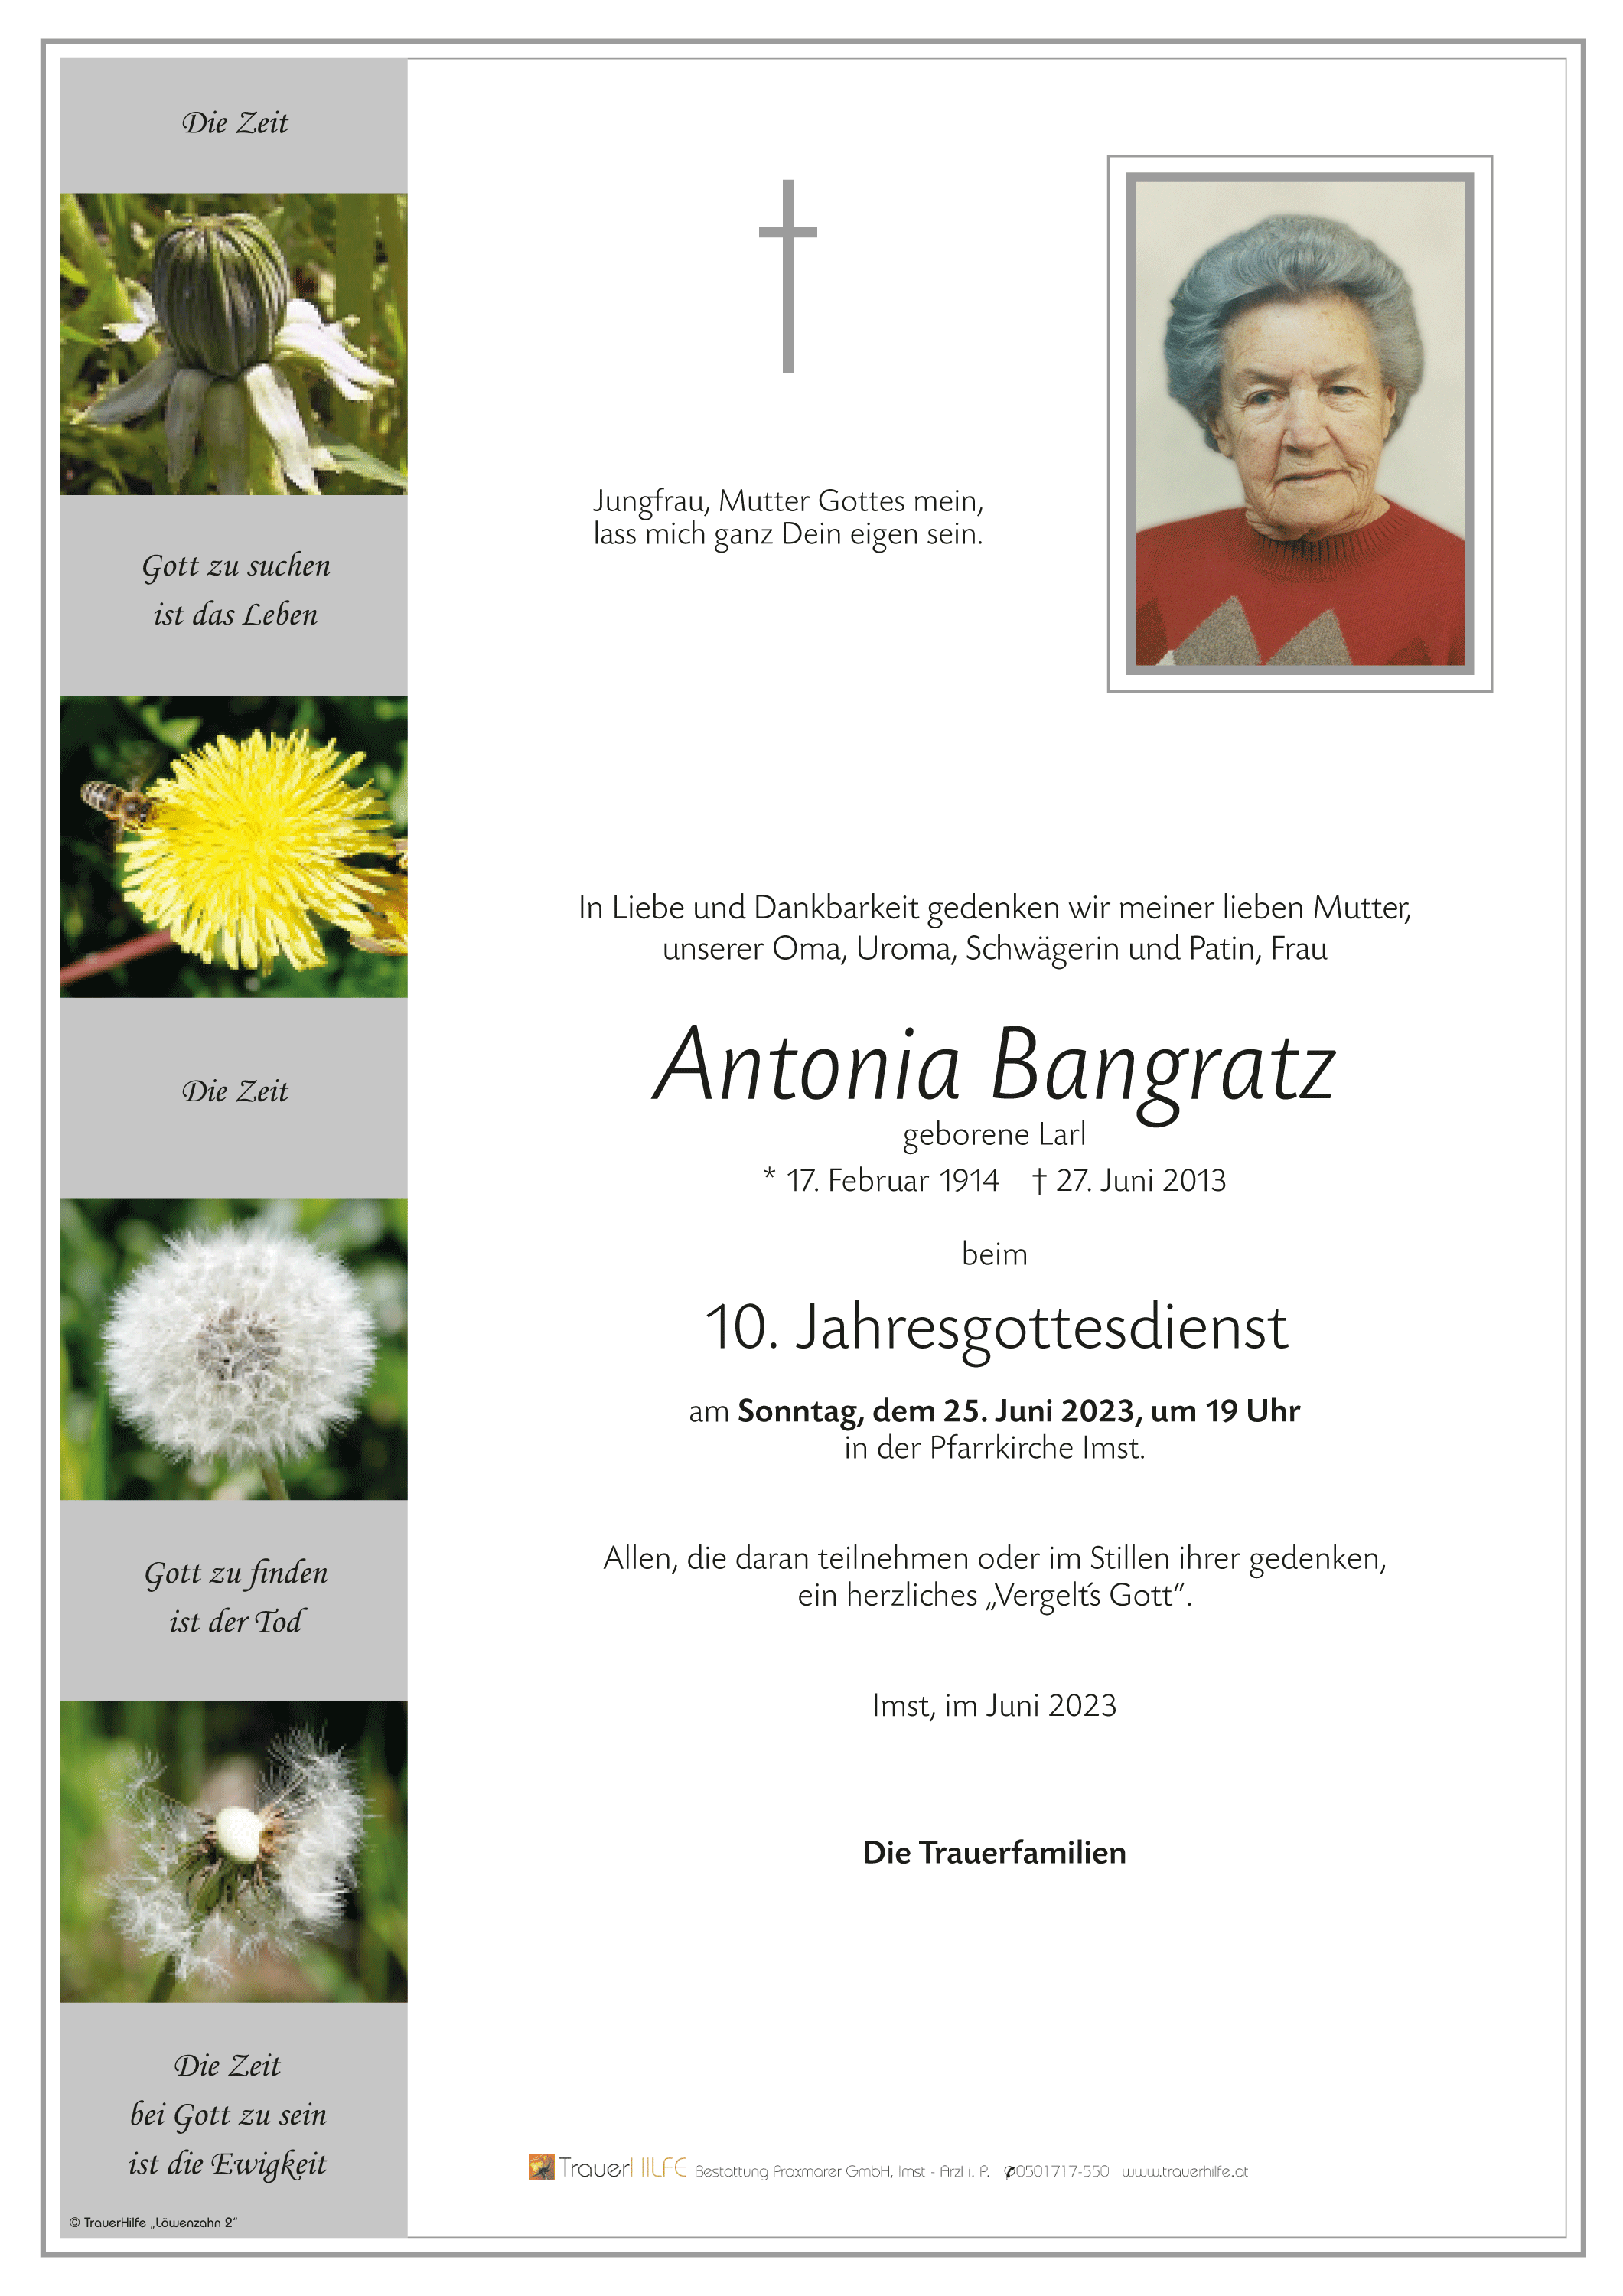 Antonia Bangratz